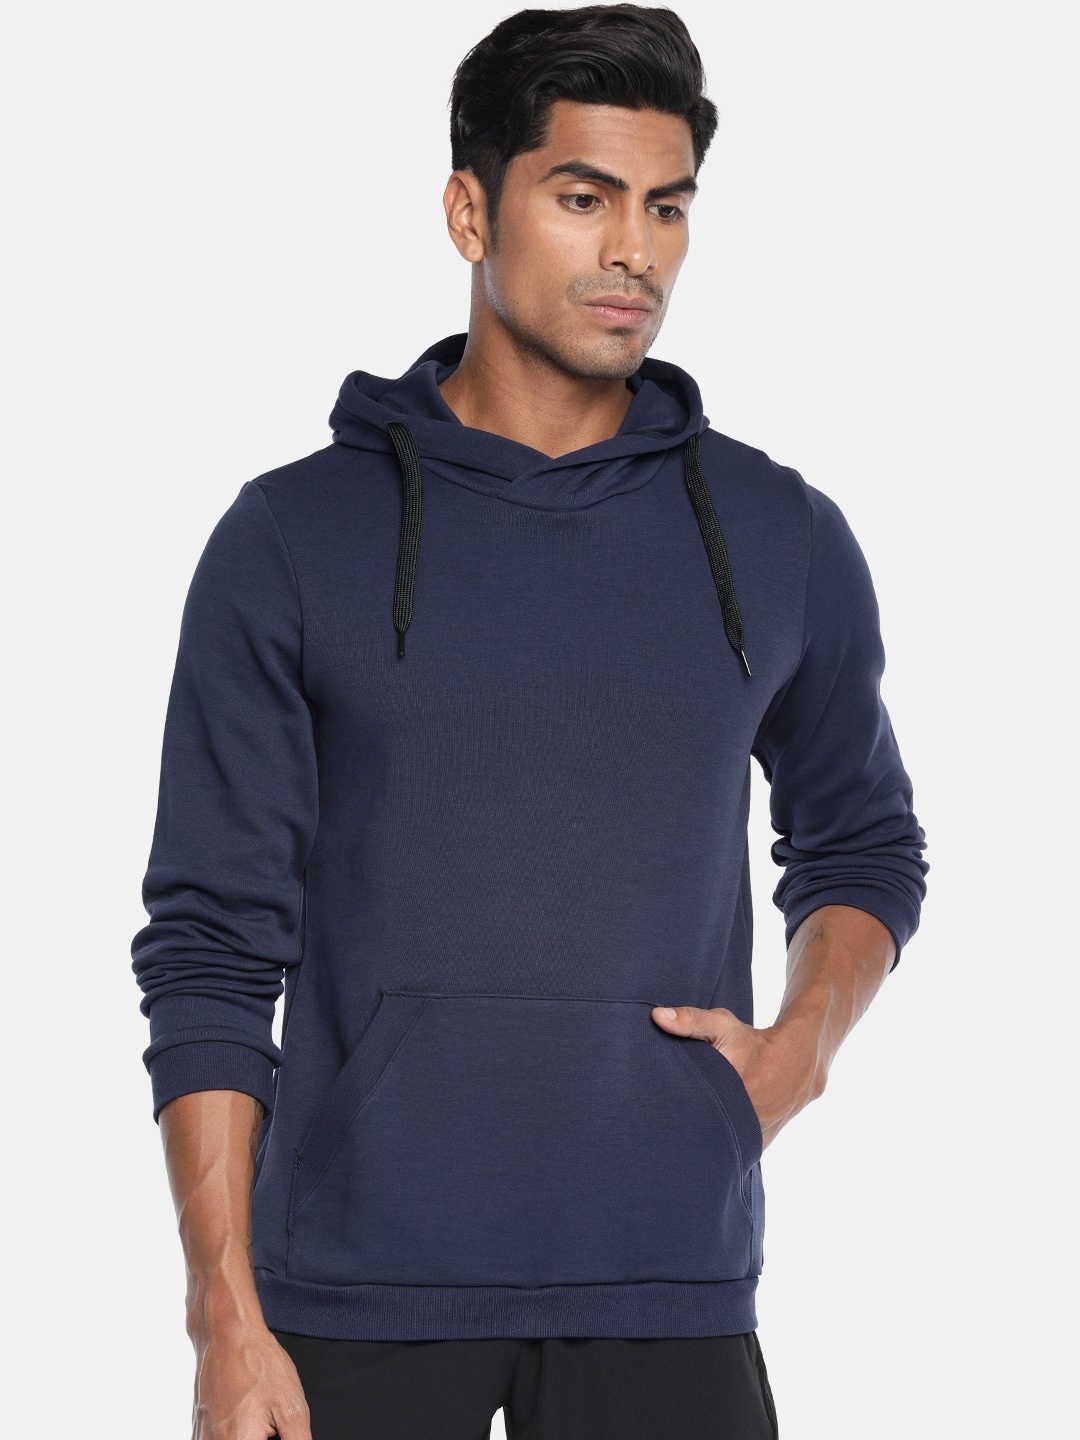 Buy ASICS Men Navy Blue Solid Hooded Training Sweatshirt - Sweatshirts ...